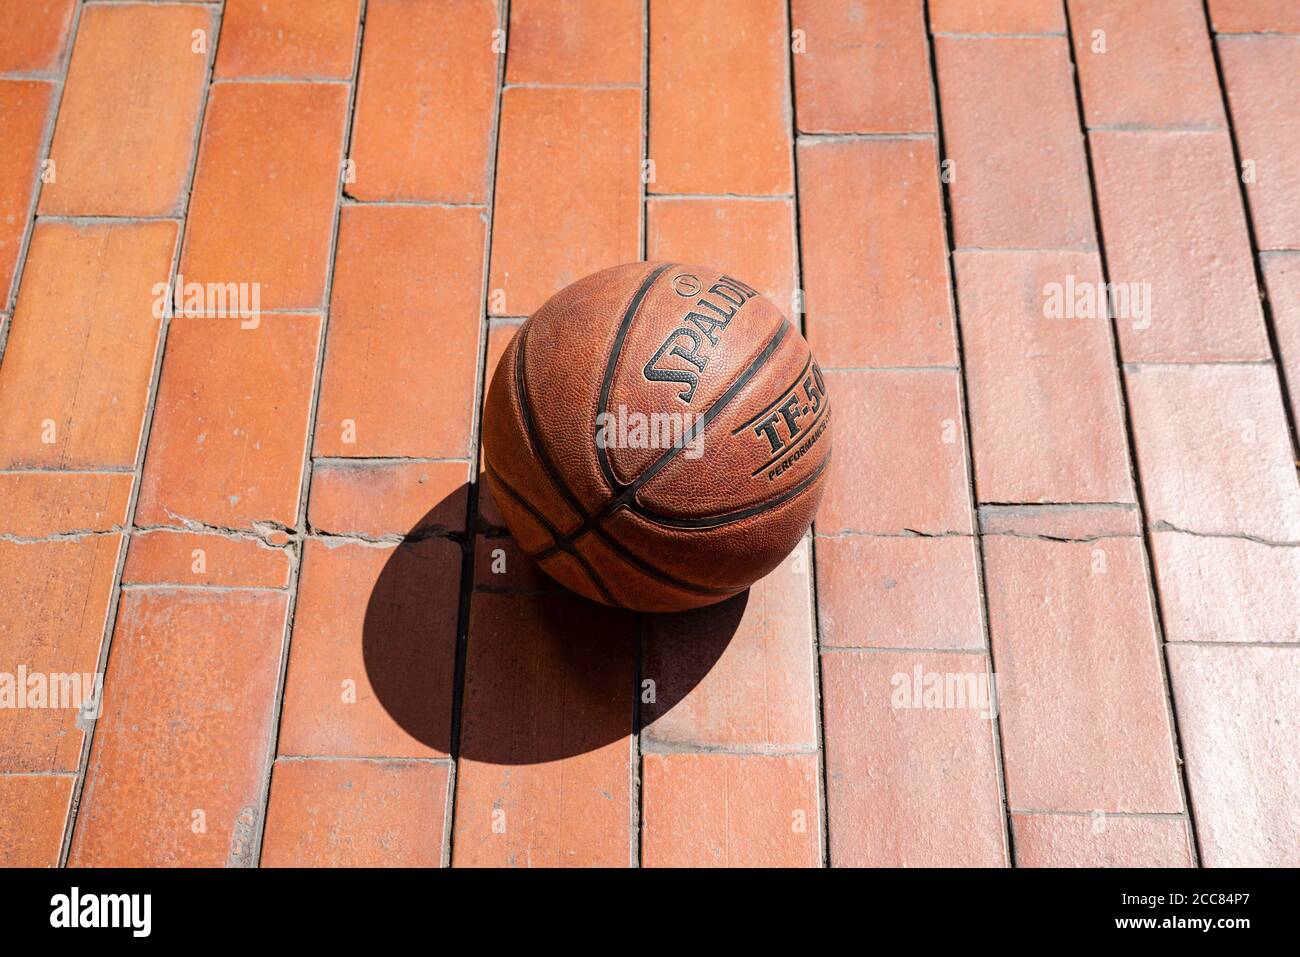 Basketball on terracotta tiles on a sunny day. Stock Photo